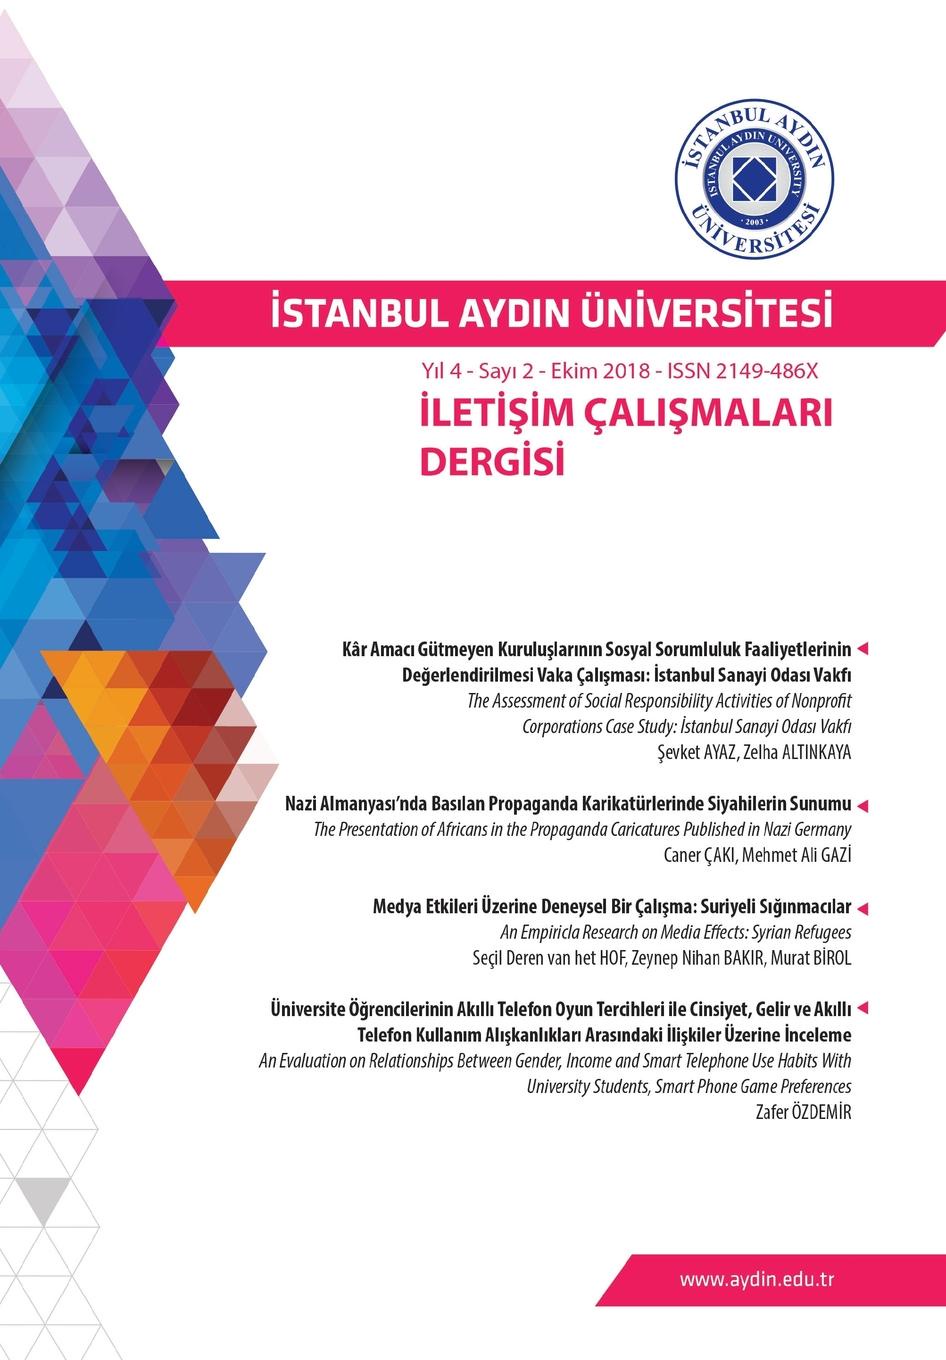 Istanbul Aydin Universitesi. Iletisim Calismalari Dergisi